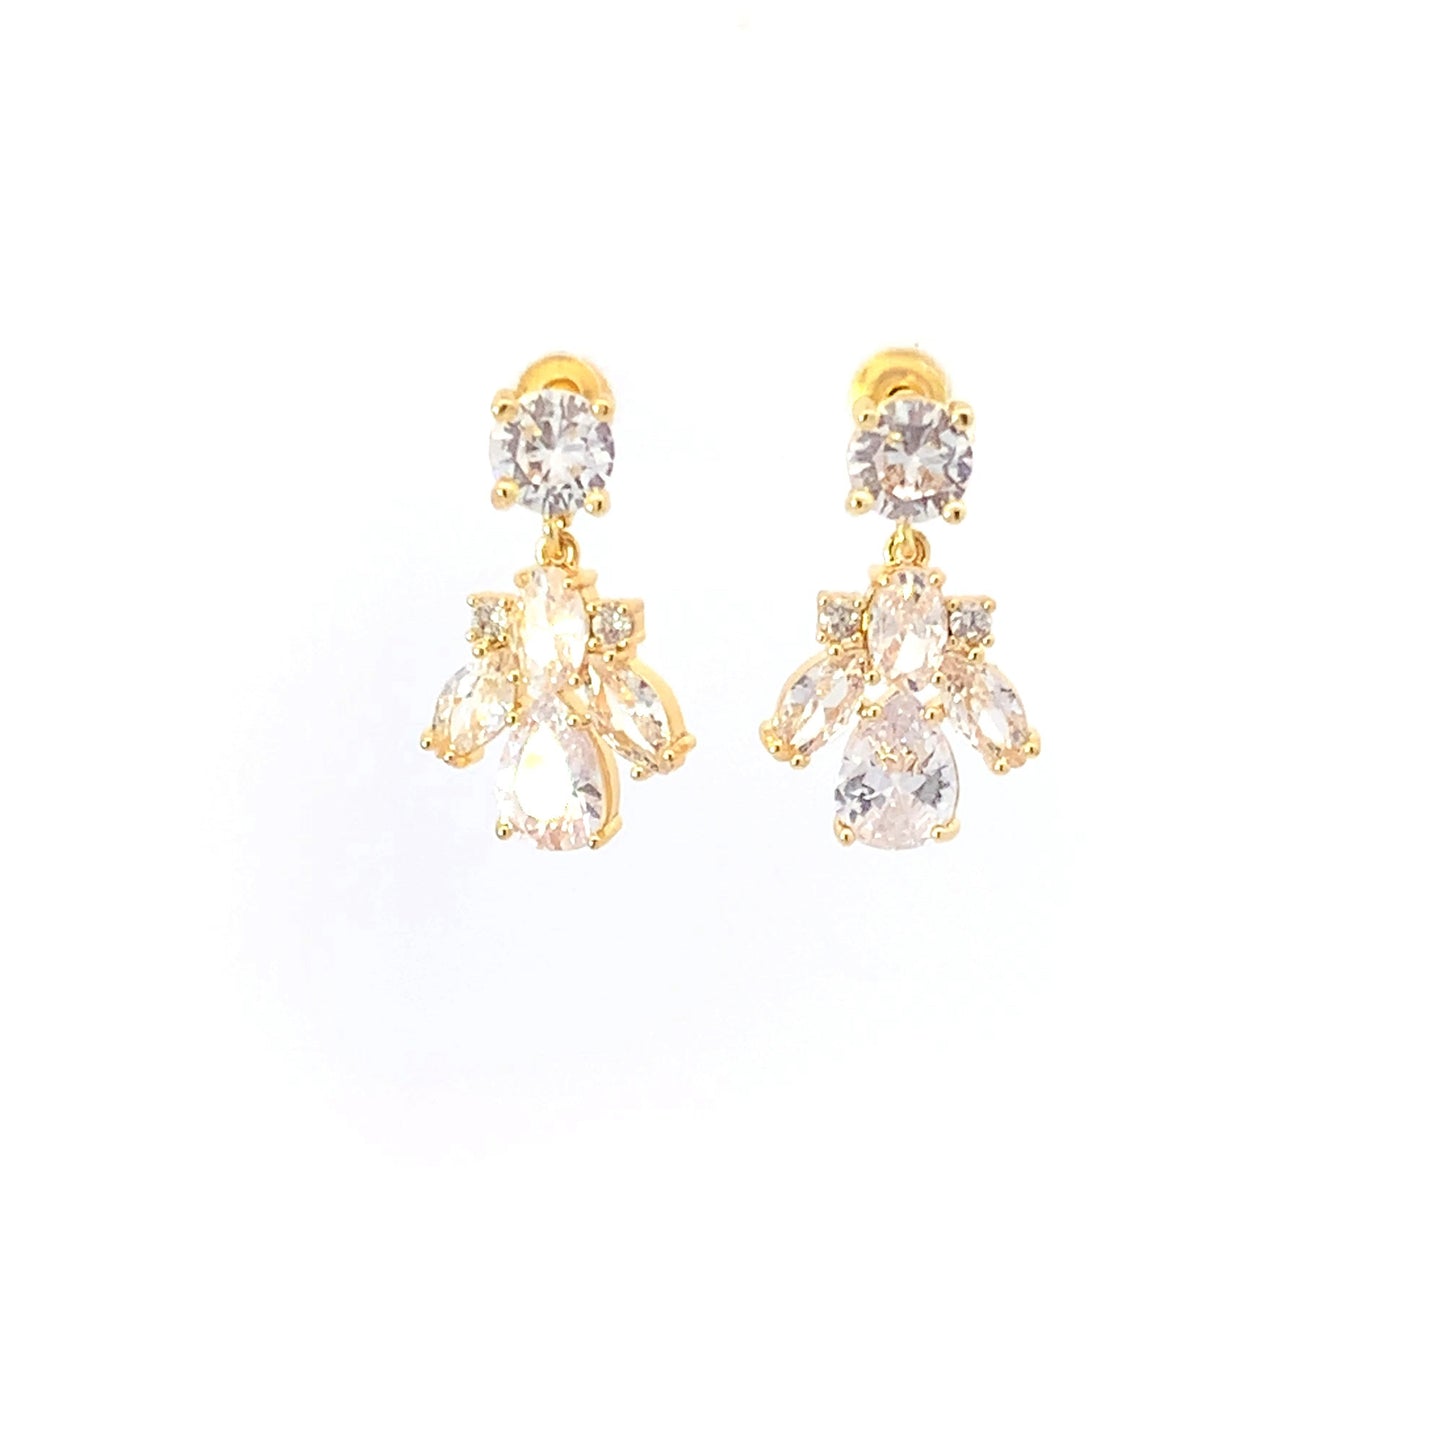 Emma crystal bridal earrings